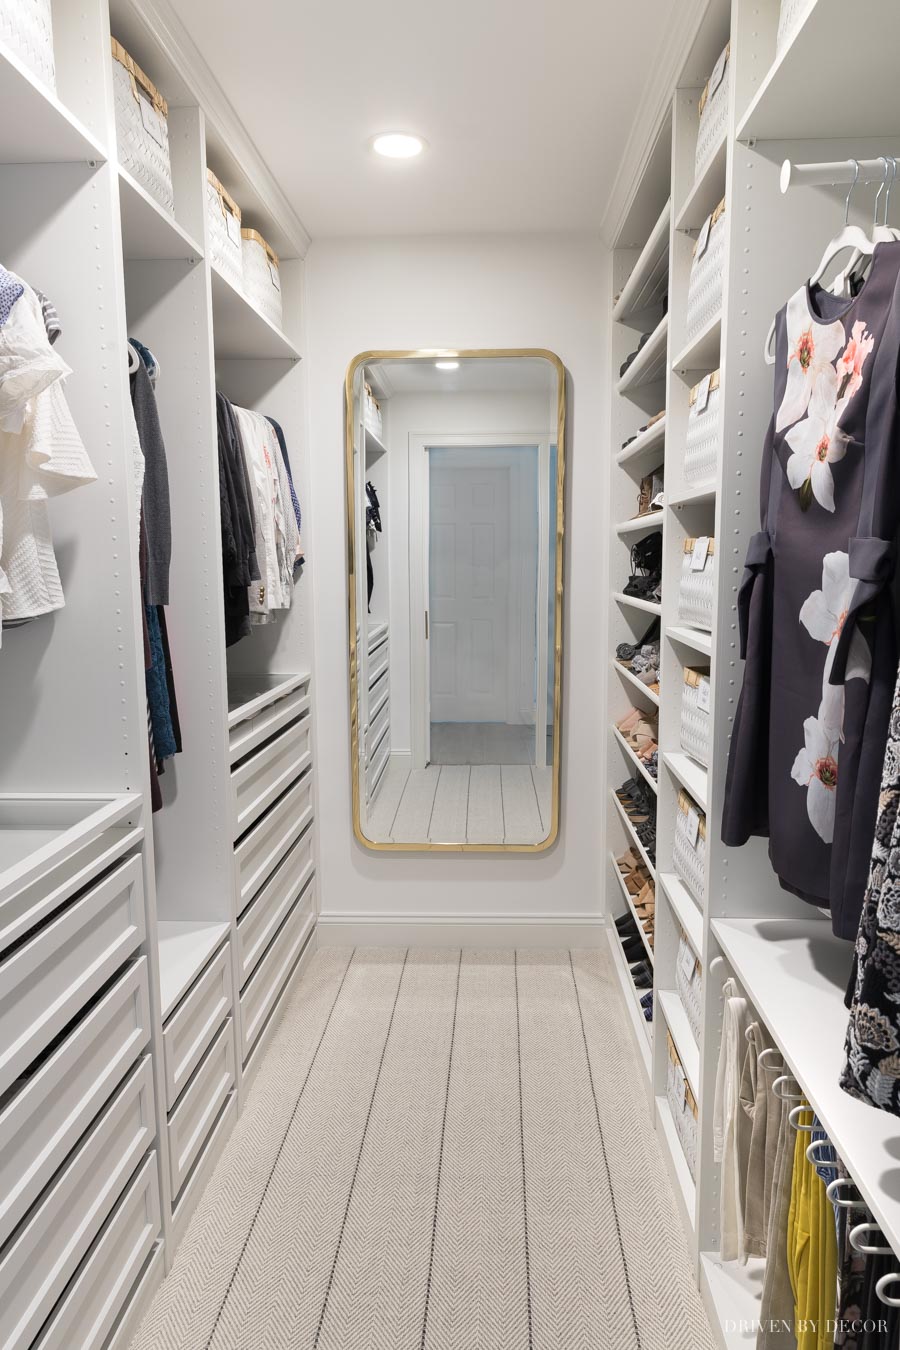 Pax closet - finished! : r/IKEA